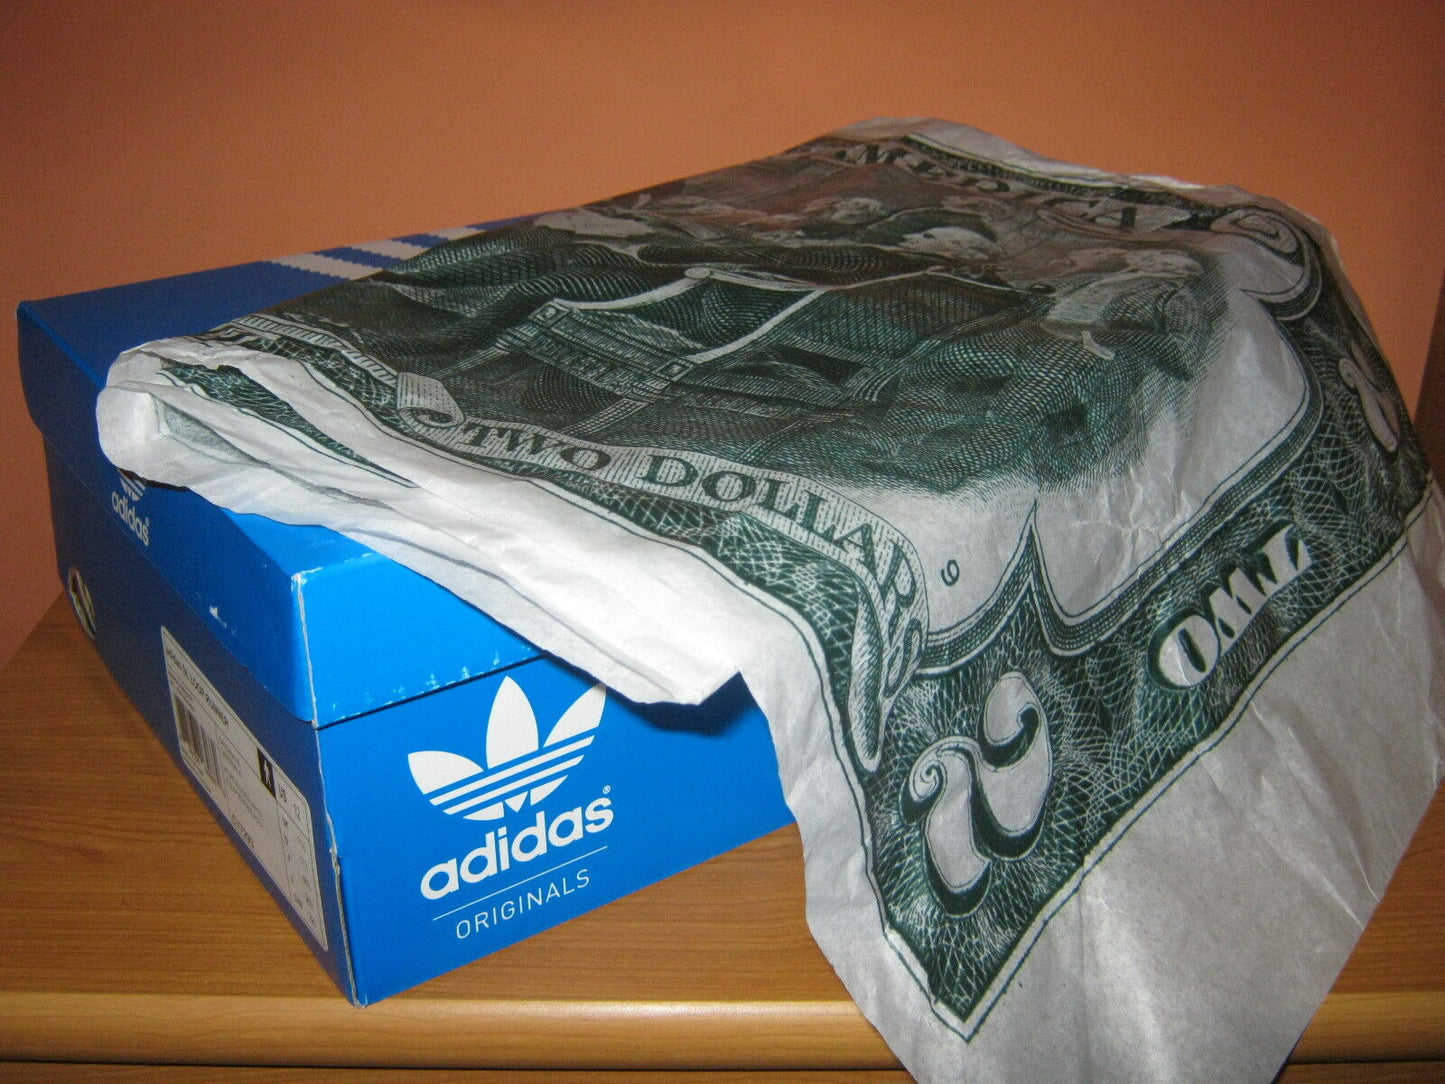 Adidas x Wish SL Loop Runner "2 Dollar-Note" + T-Shirt NEU US 12 UK 11,5 FR 46 ⅔